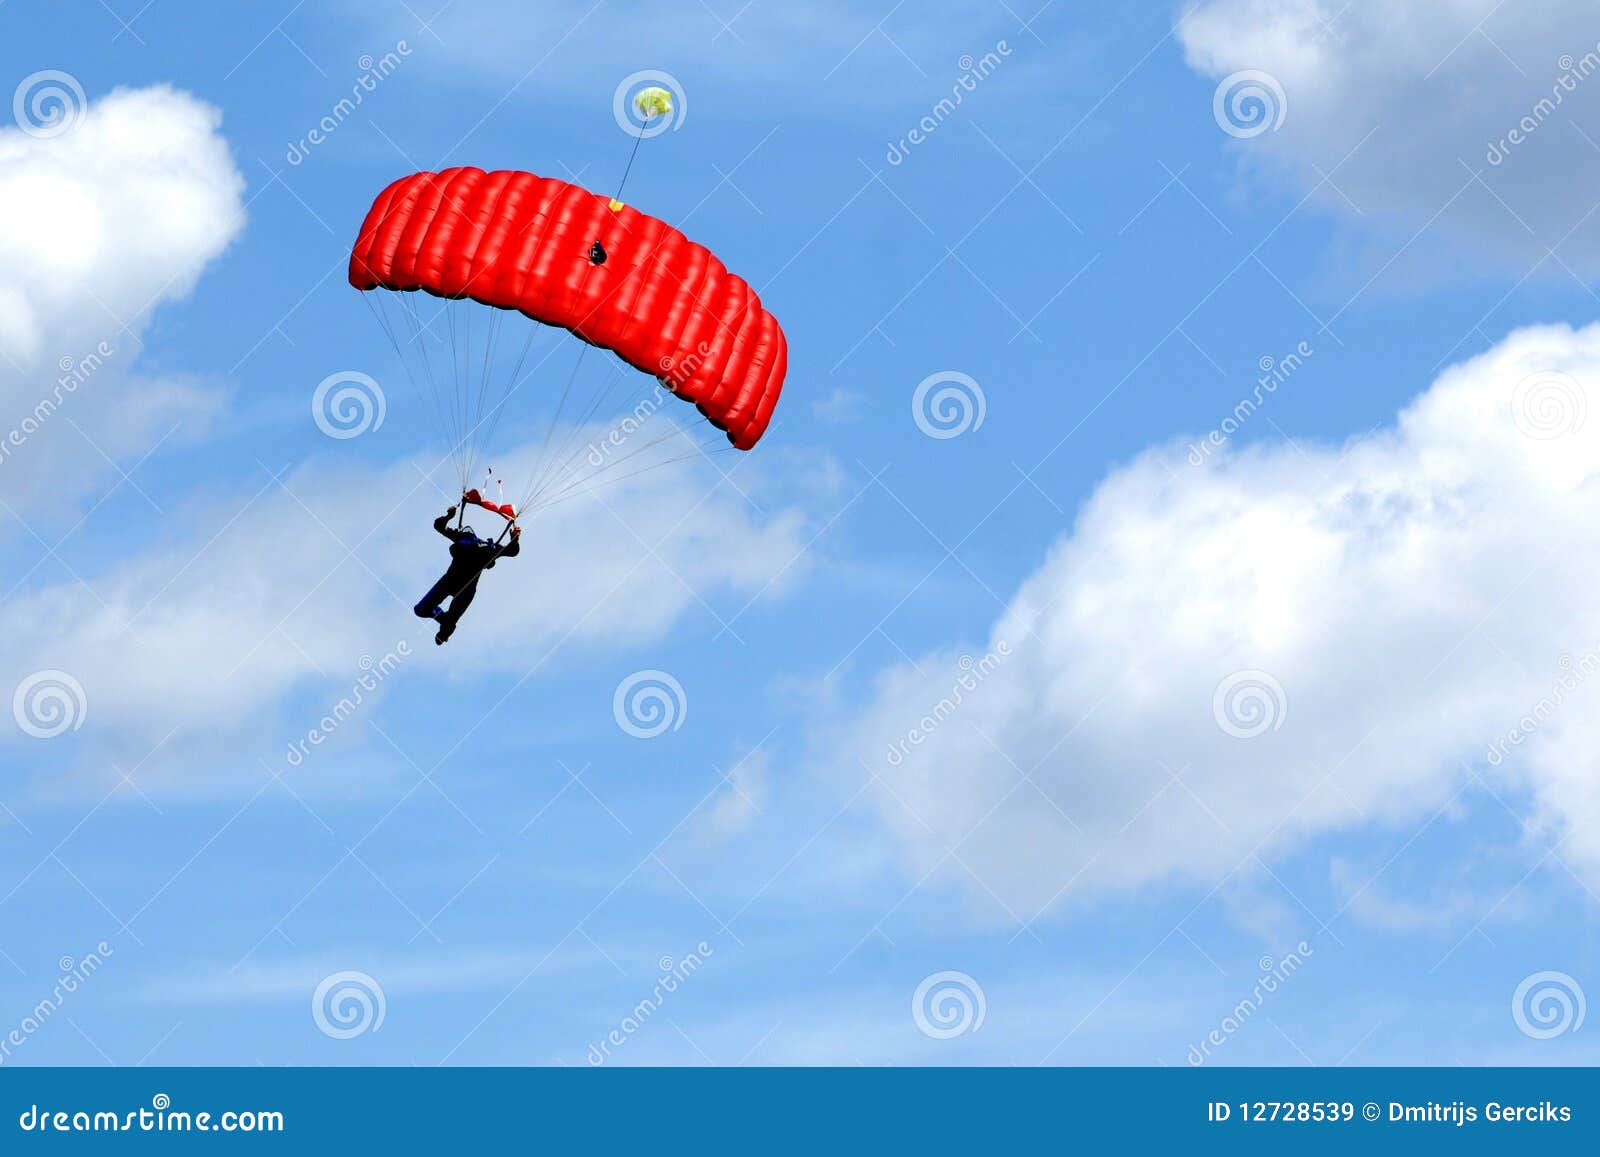 extreme sports. parachuting